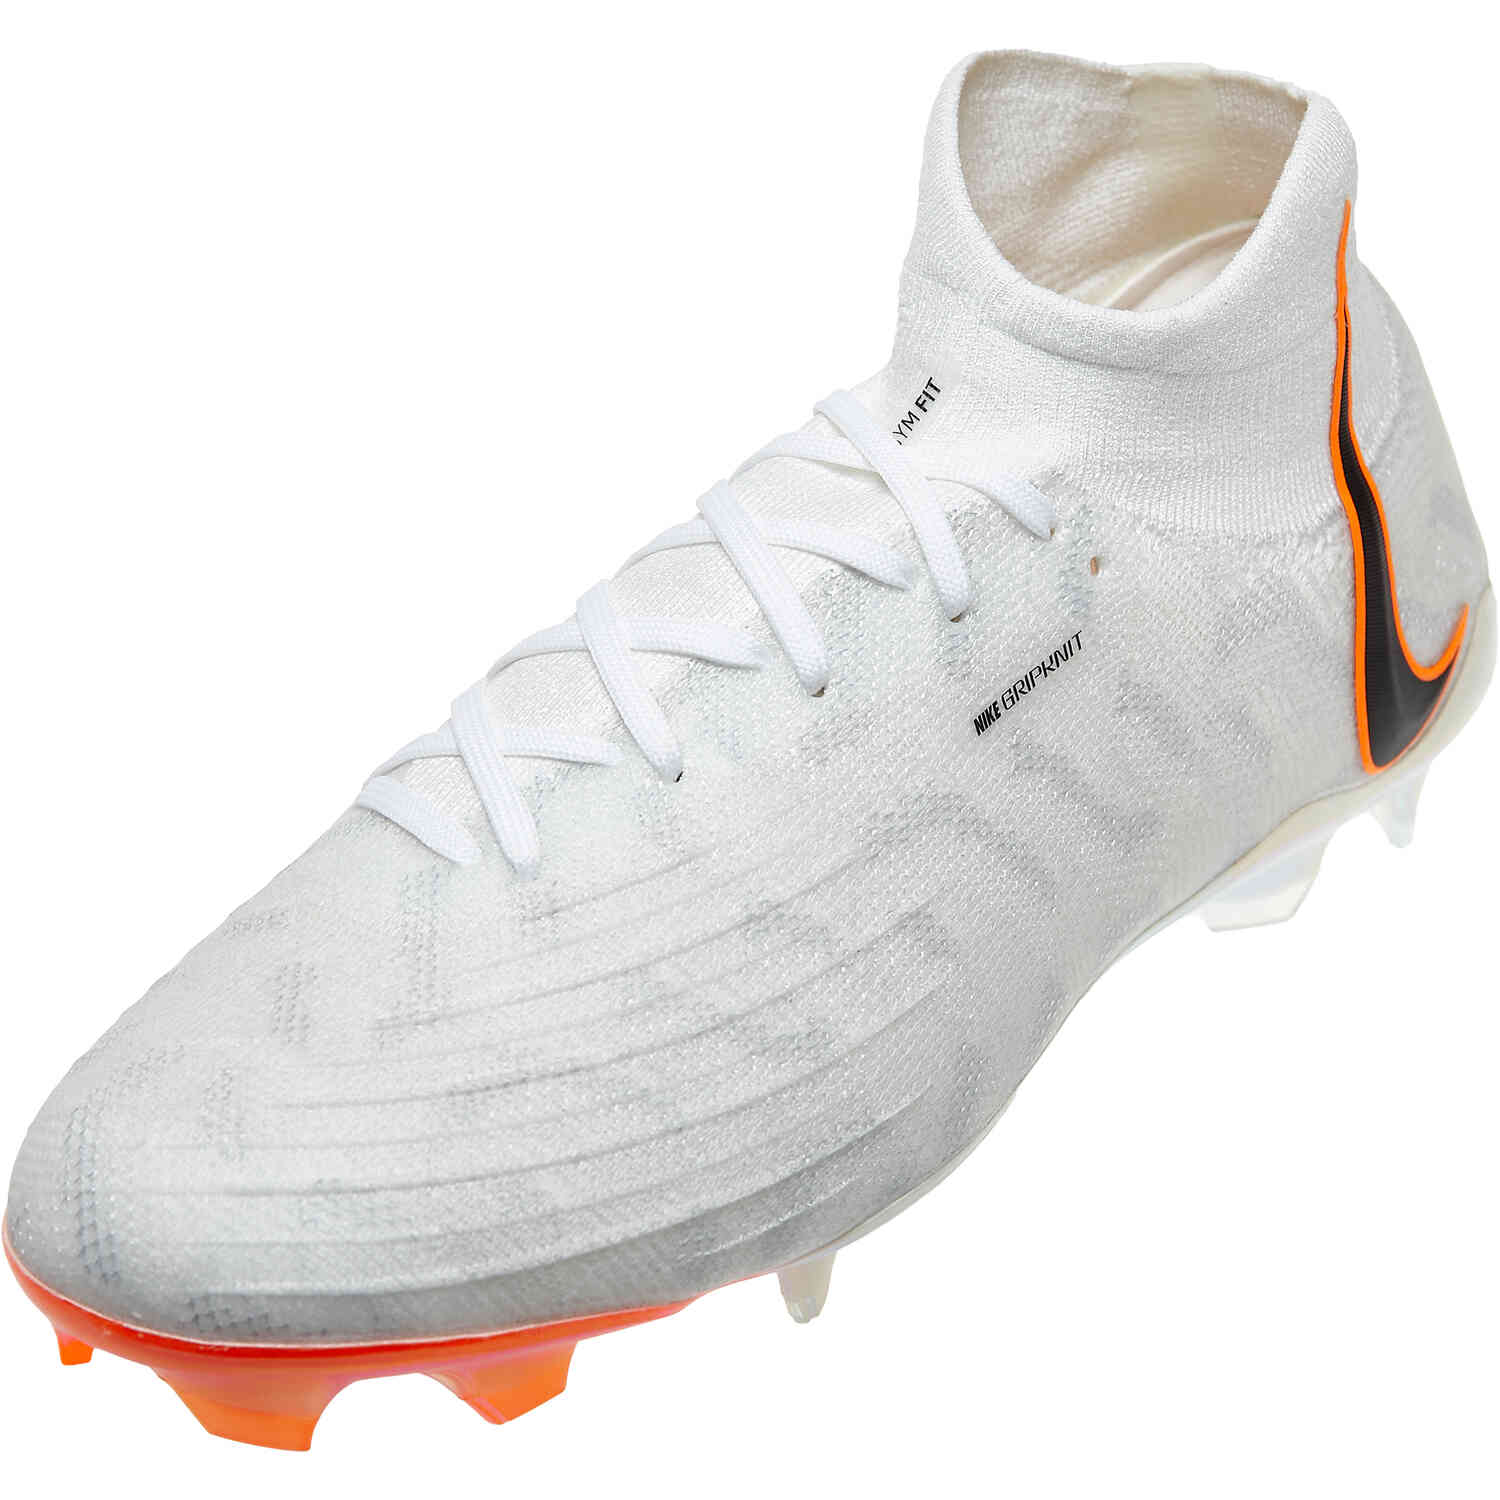 Nike Phantom Luna Elite FG Firm Cleats - White, & Total Orange - Soccer